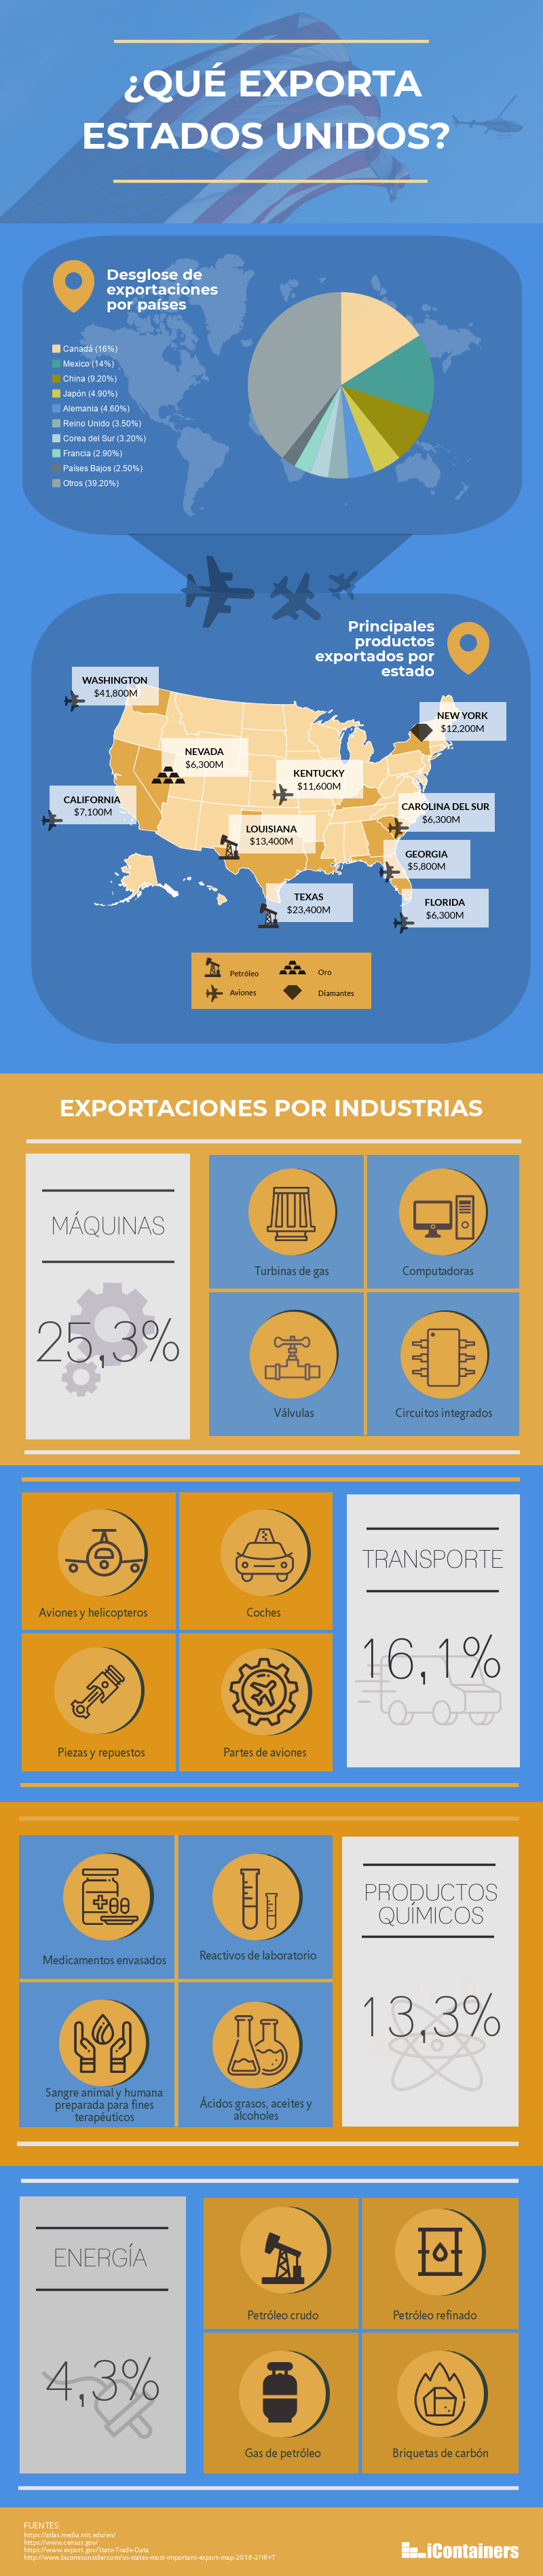 infografia-que-exporta-estados-unidos.png